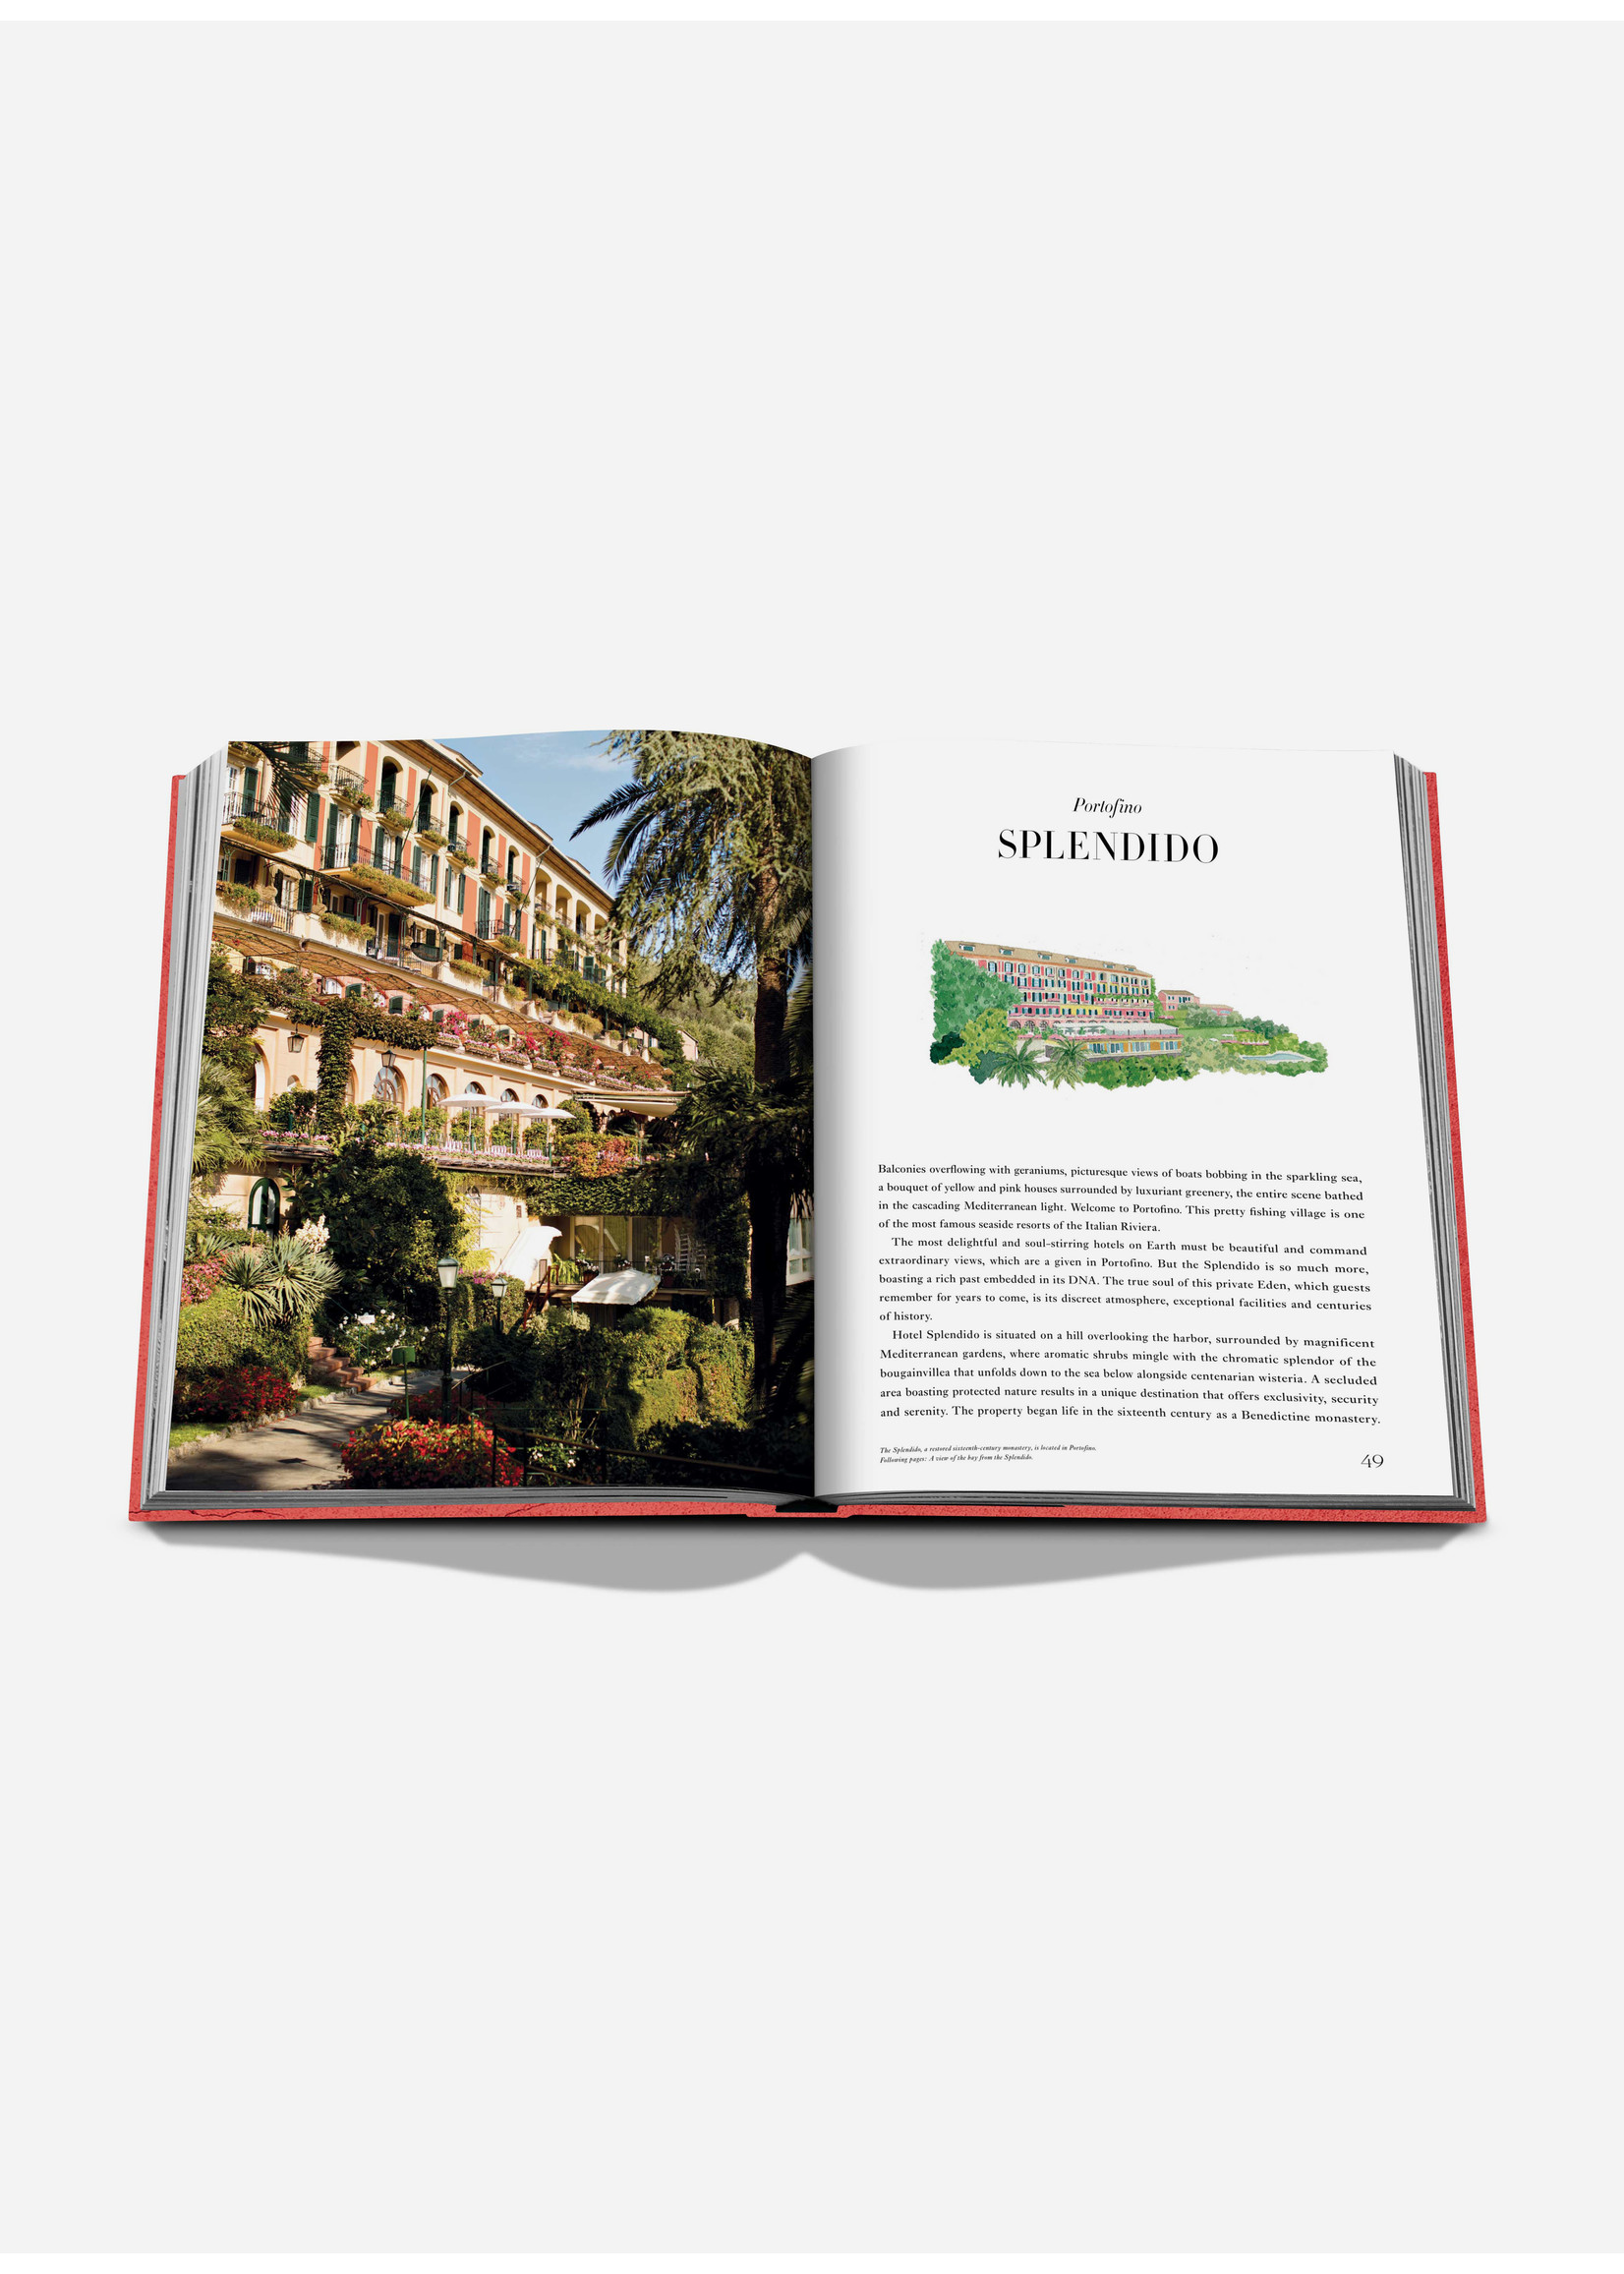 Assouline Books Villeggiatra: Italian Summer Vacation